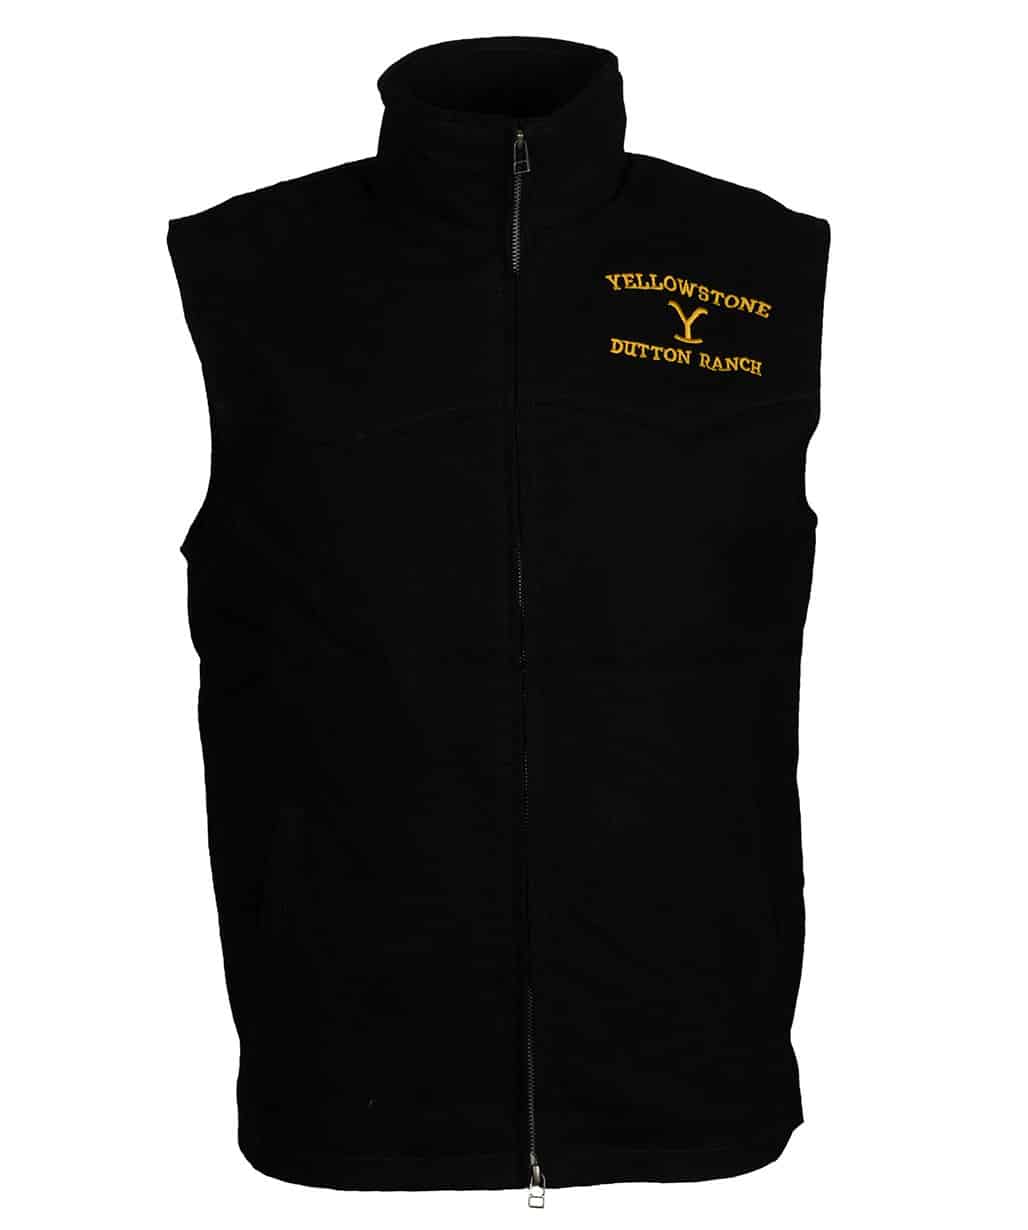 kevin-costner-john-dutton-black-cotton-vest-yellowstone-outfits-Sale